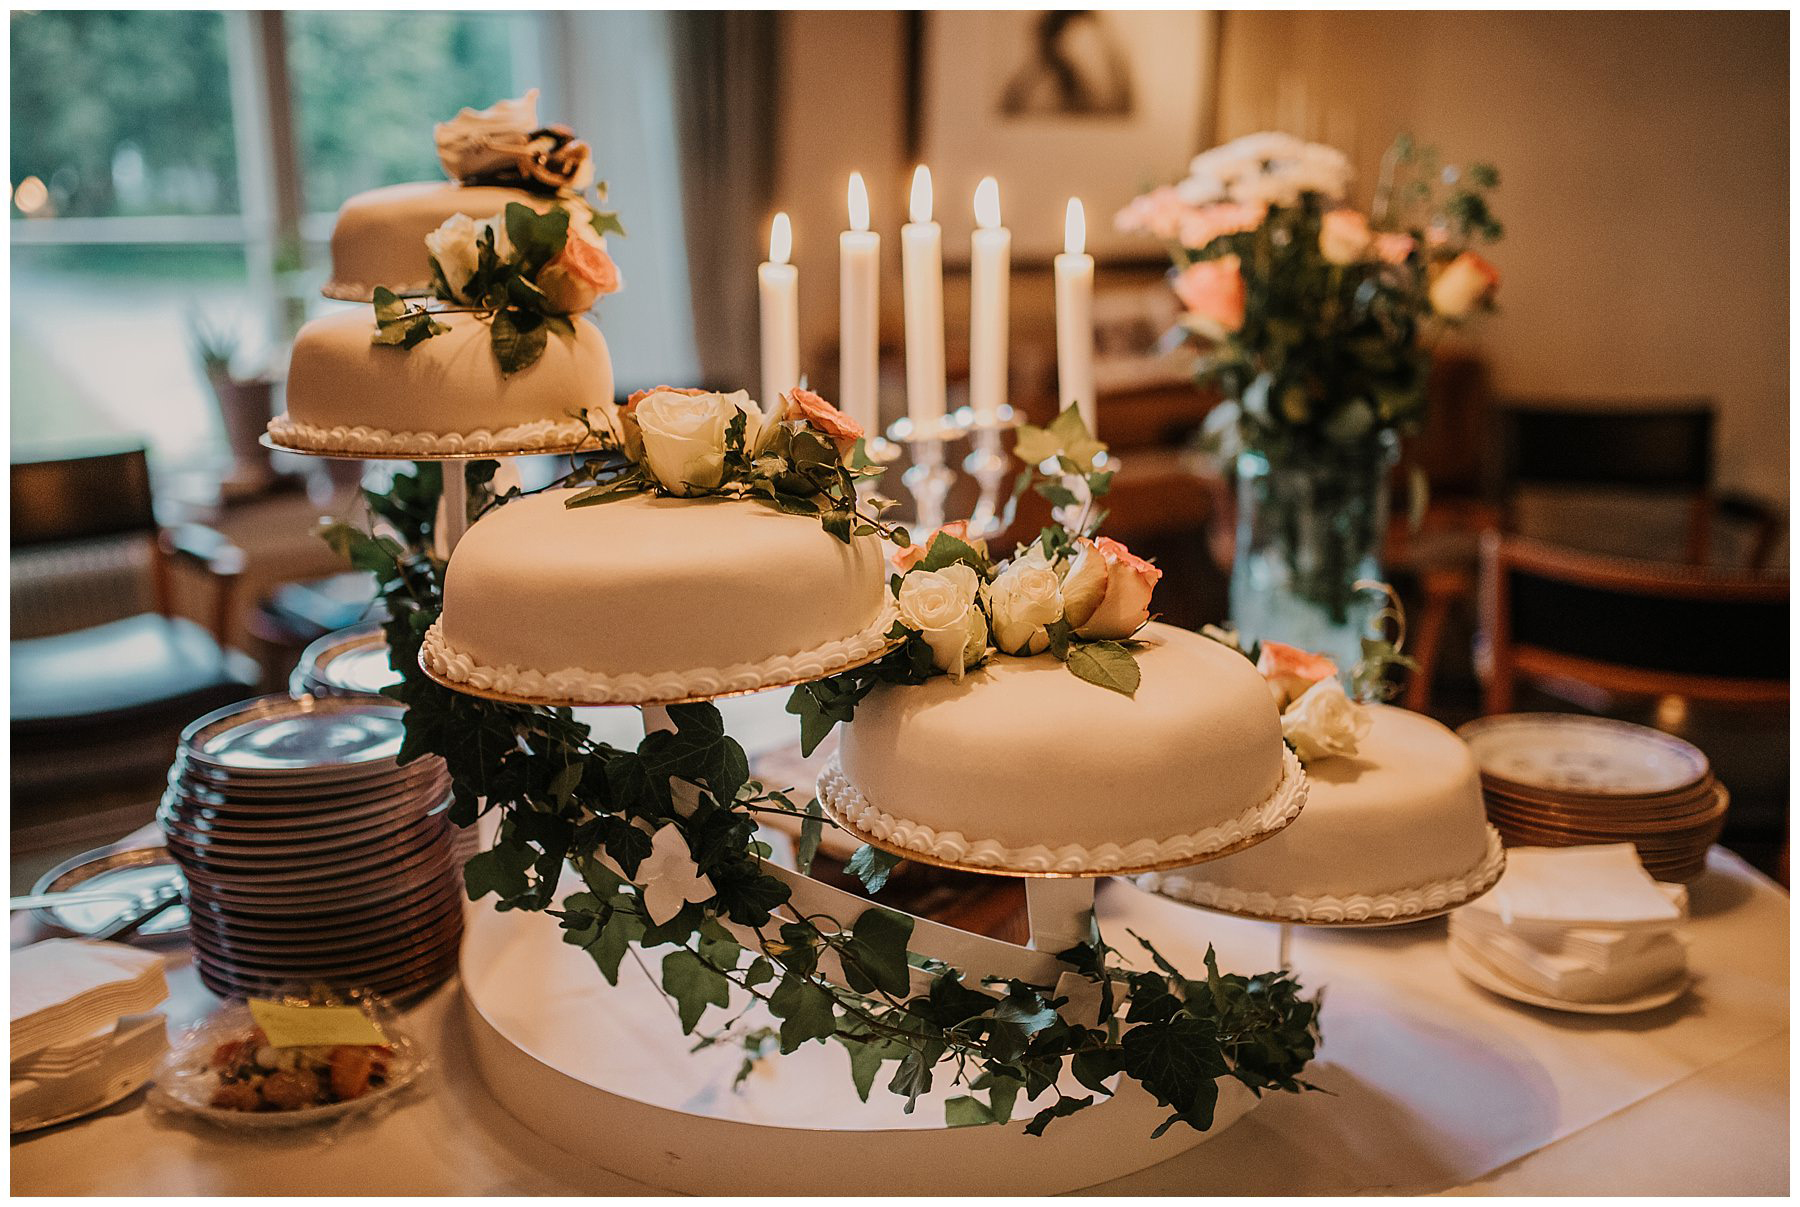 Bröllopstårta med blommor på Rosersbergs slott